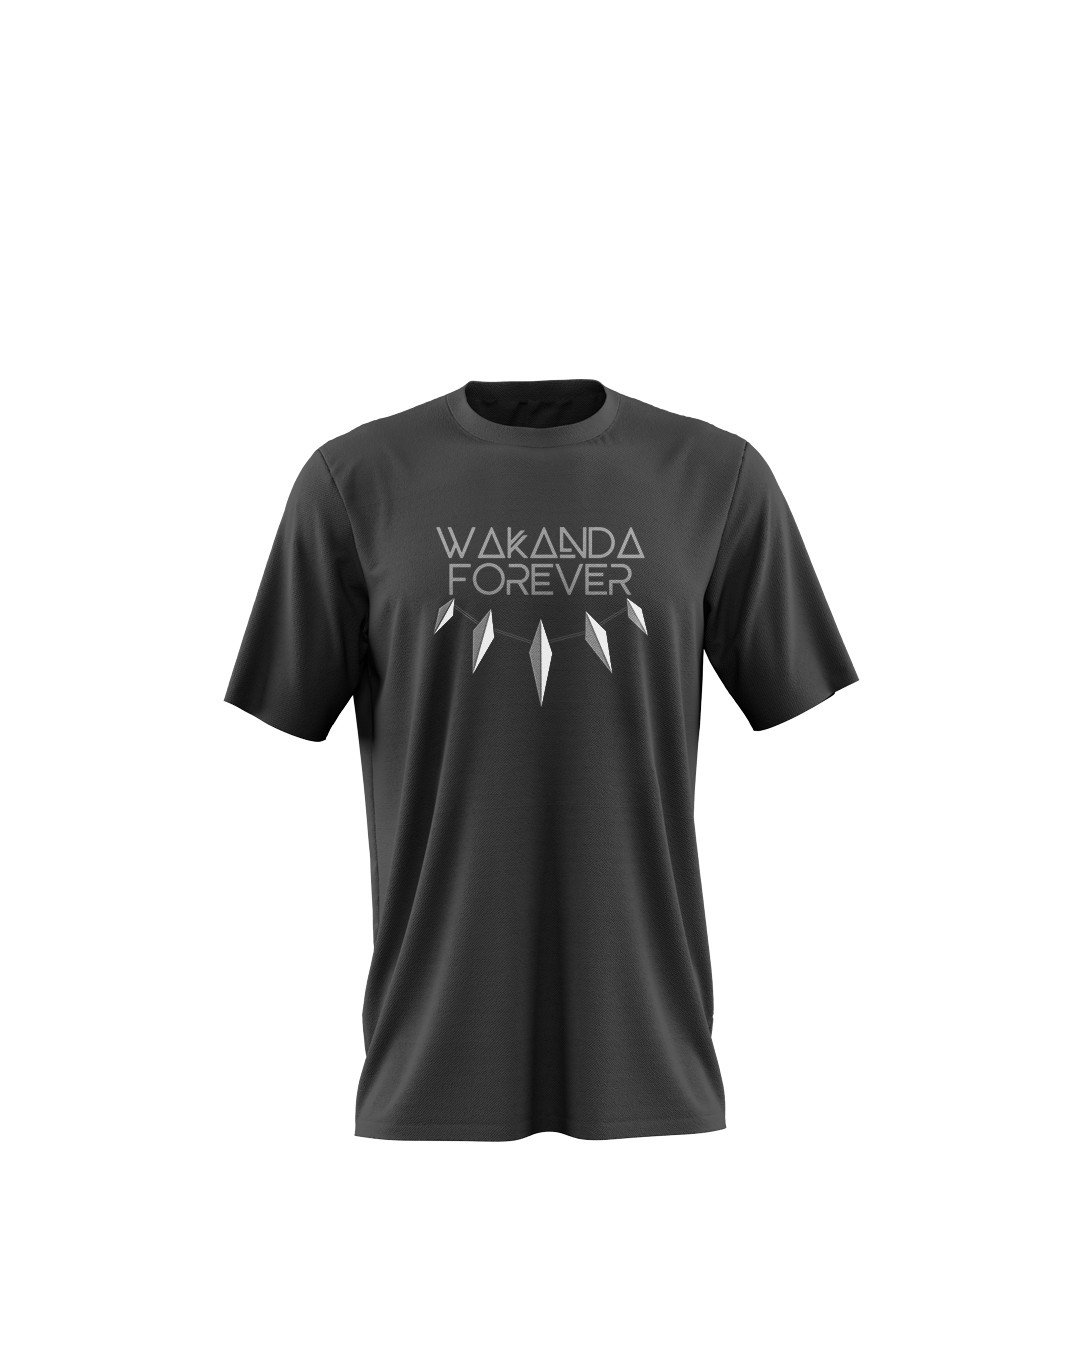 TeesWarrior Black Panther Wakanda Forever Graphic Printed 100% Cotton T-Shirt - Regular Fit, Round Neck, Half Sleeves